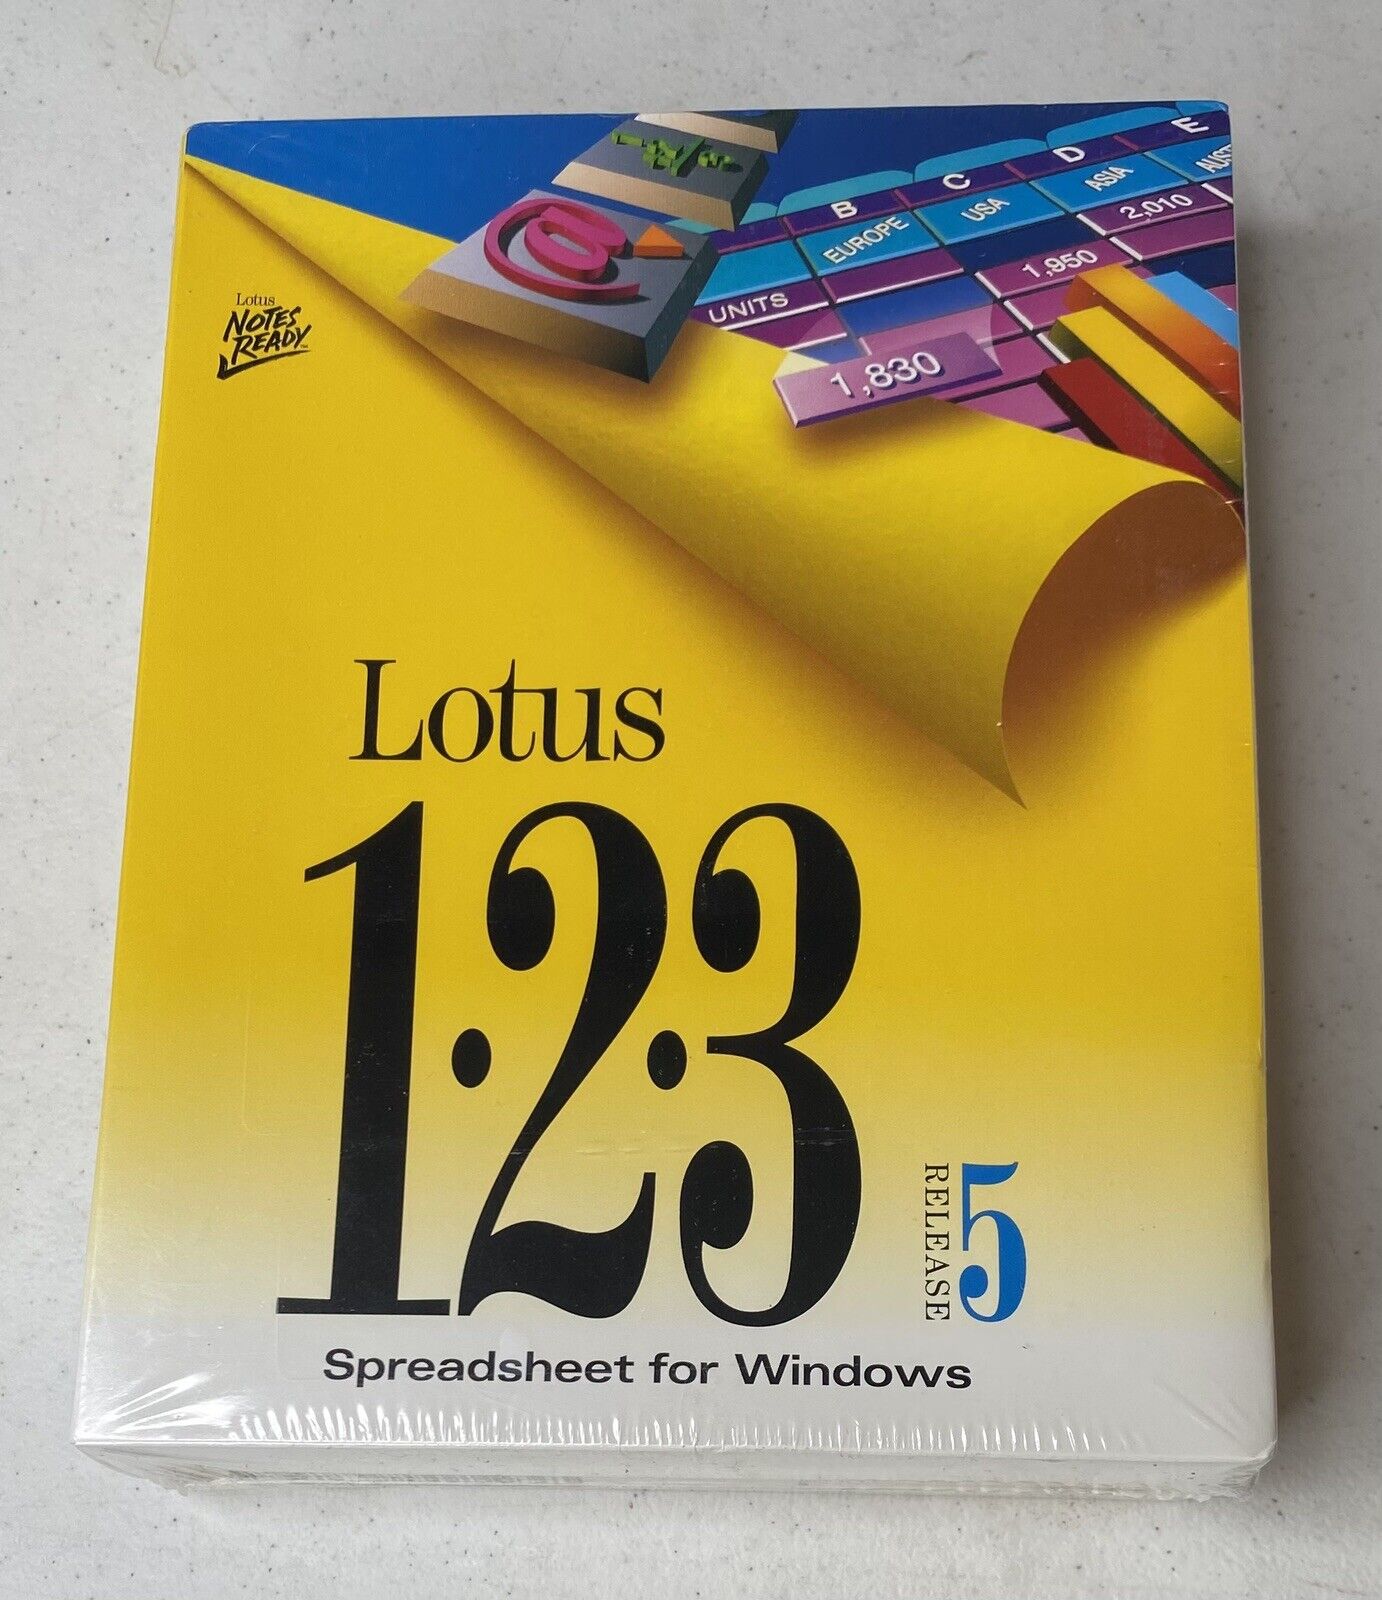 Vintage Sealed 1994 Lotus 1 2 3 123 R5 Microsoft Windows 3.1 Software - 3.5 Disk